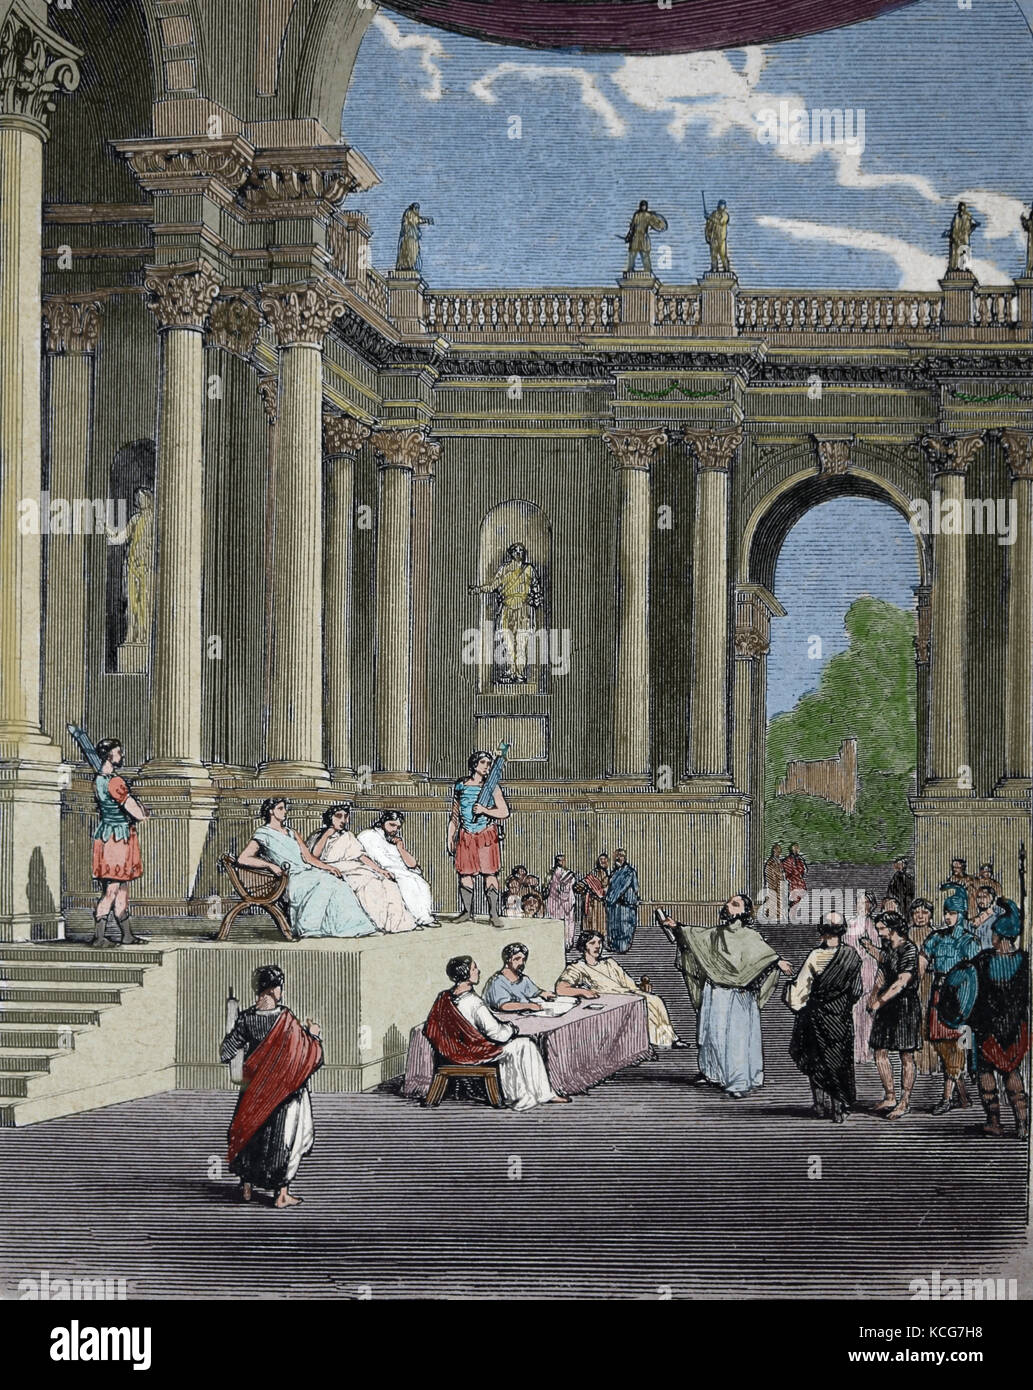 Roman Praetorium or Palace of Pontius Pilates, Roman prefect of Judea, Jerusalem. Engraving, 1890. Color. Stock Photo